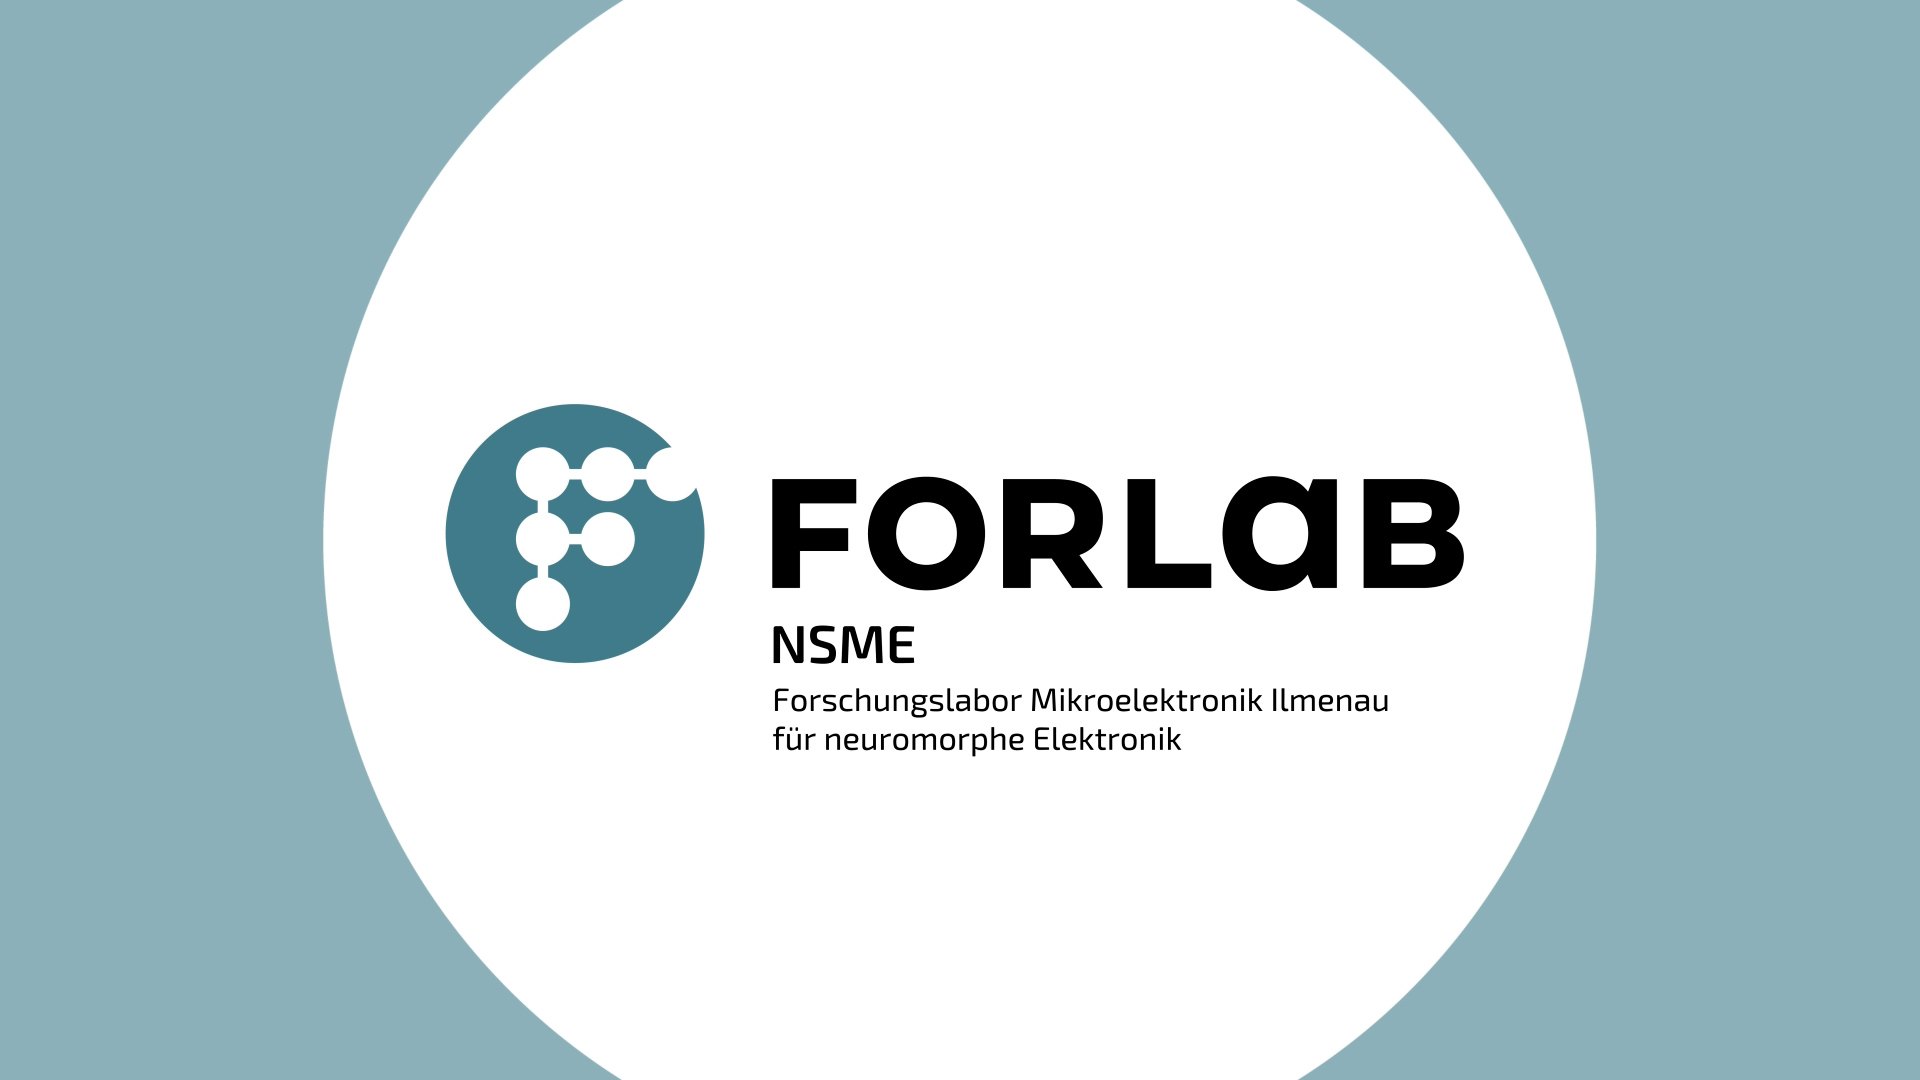 Forlab NSME